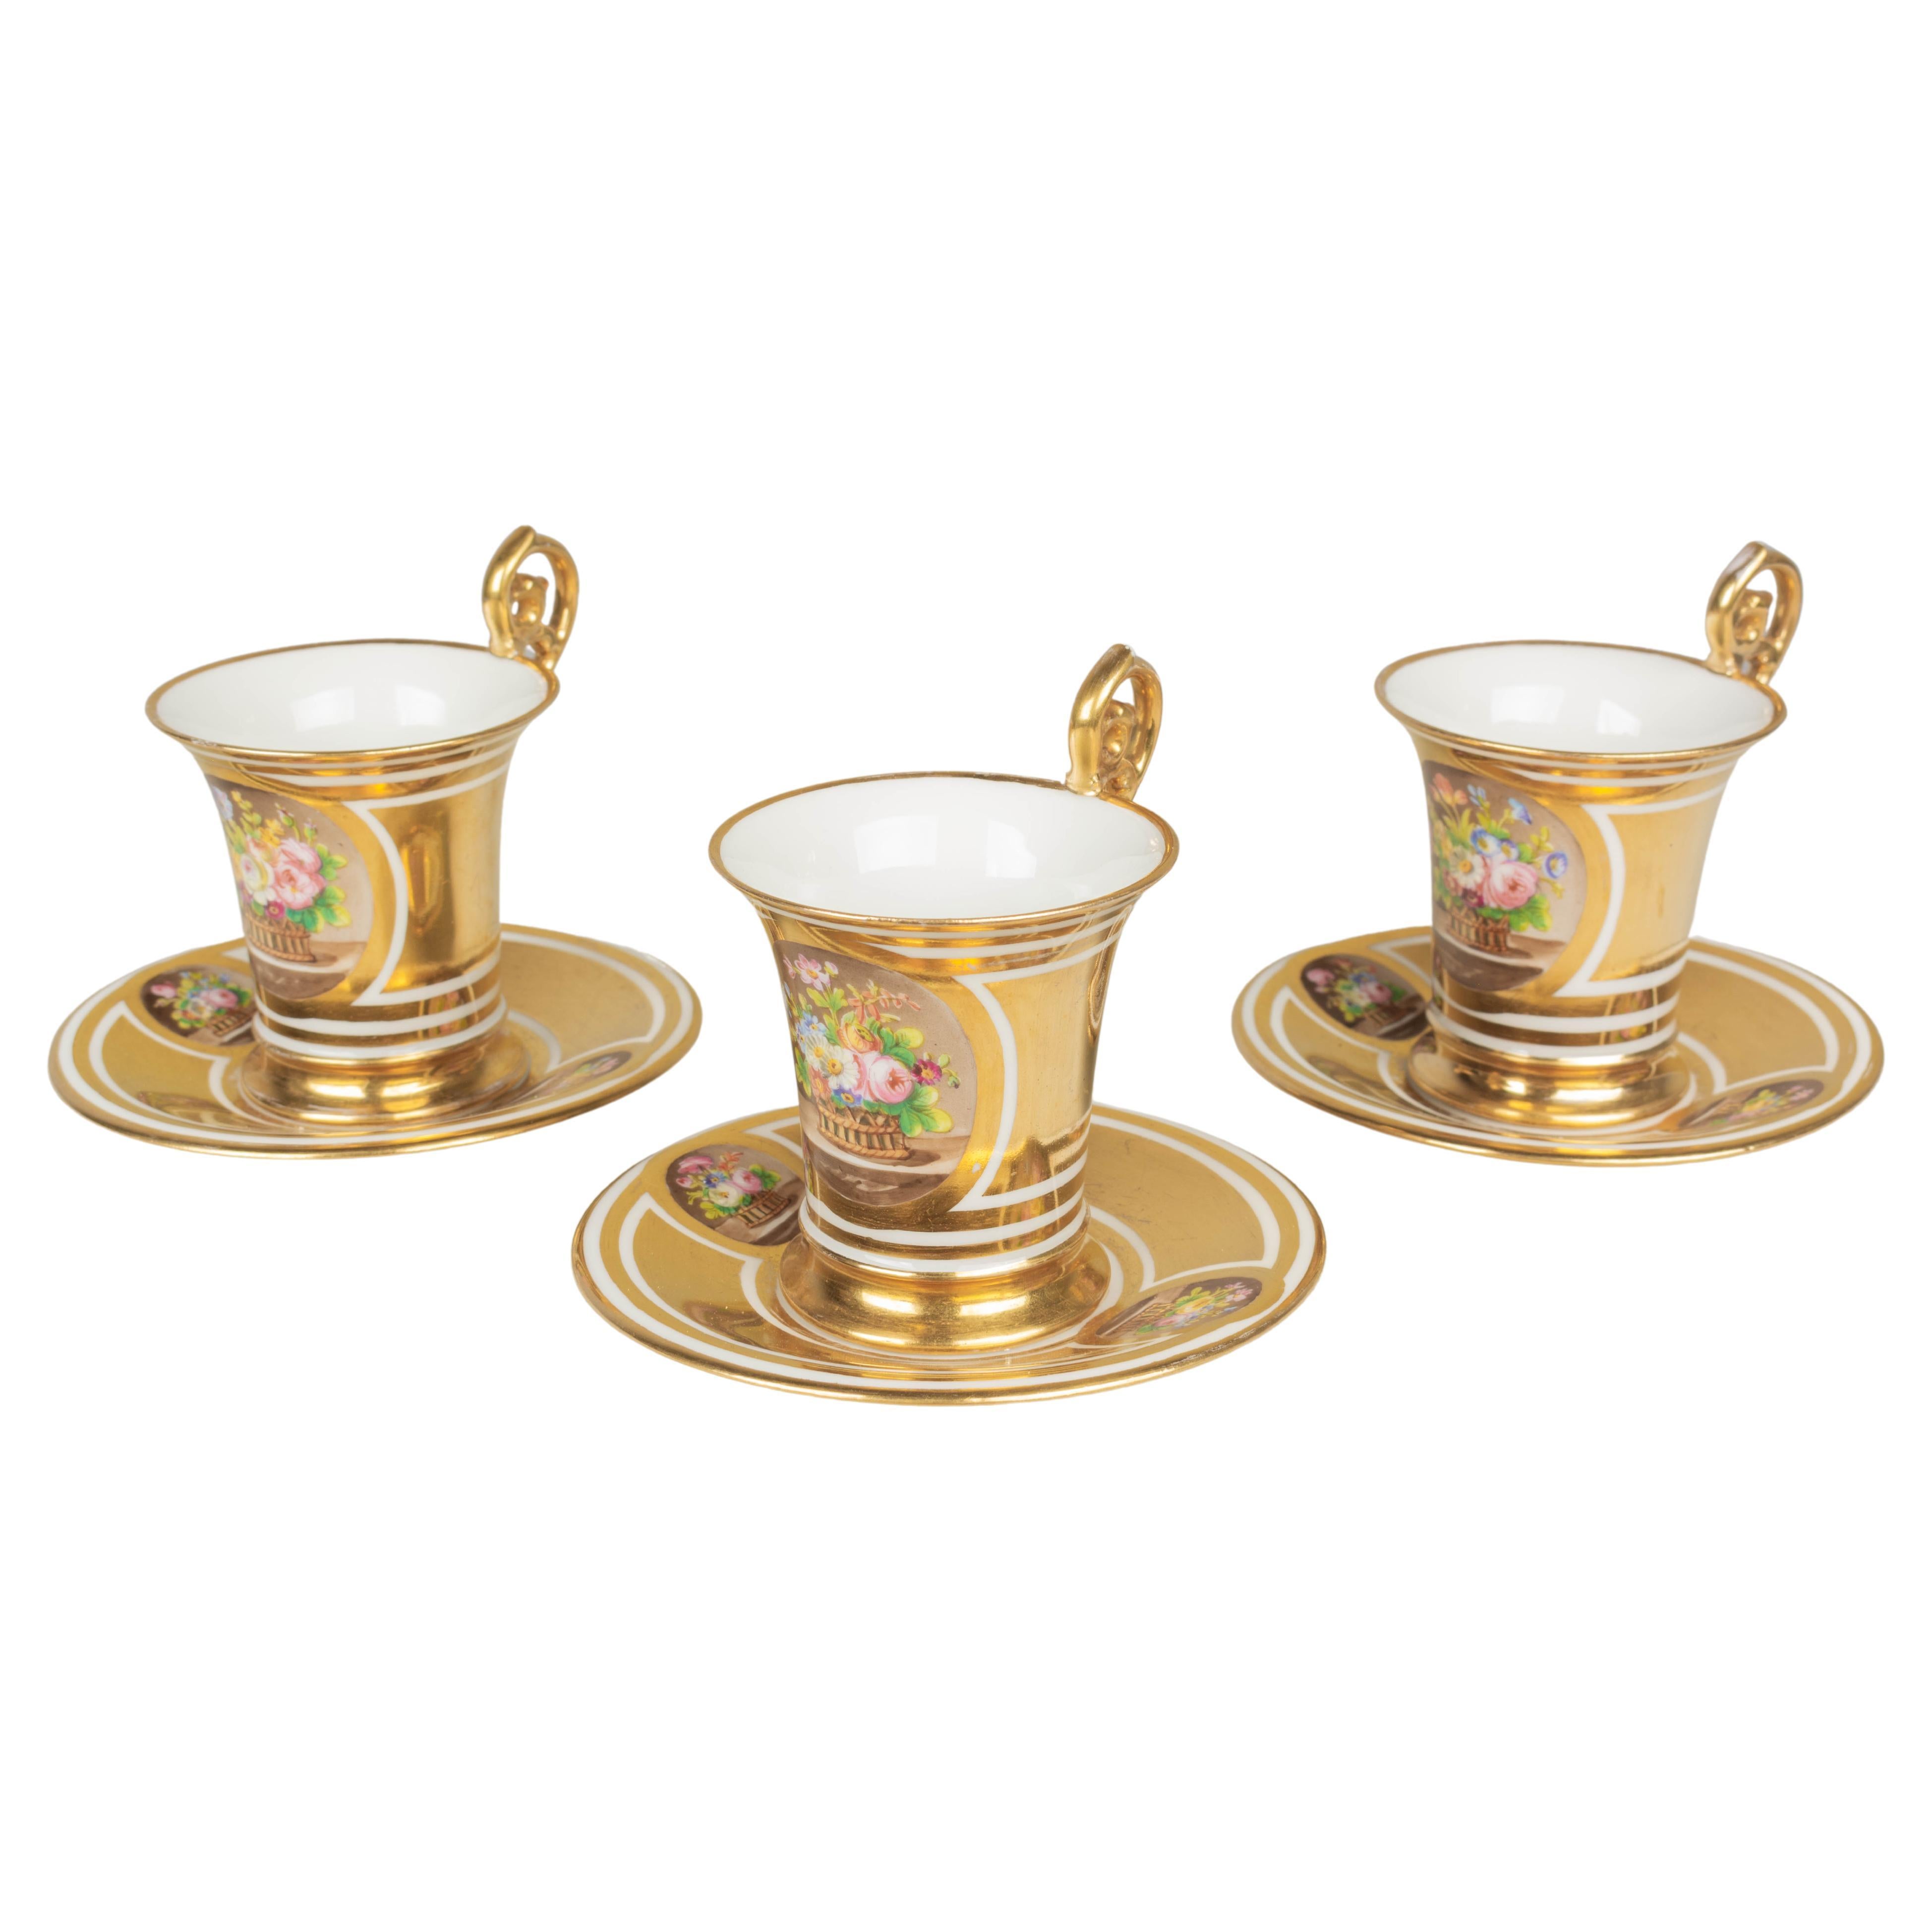 19th Century French Sèvres Gilt Porcelain Cup & Saucer, Set of 3